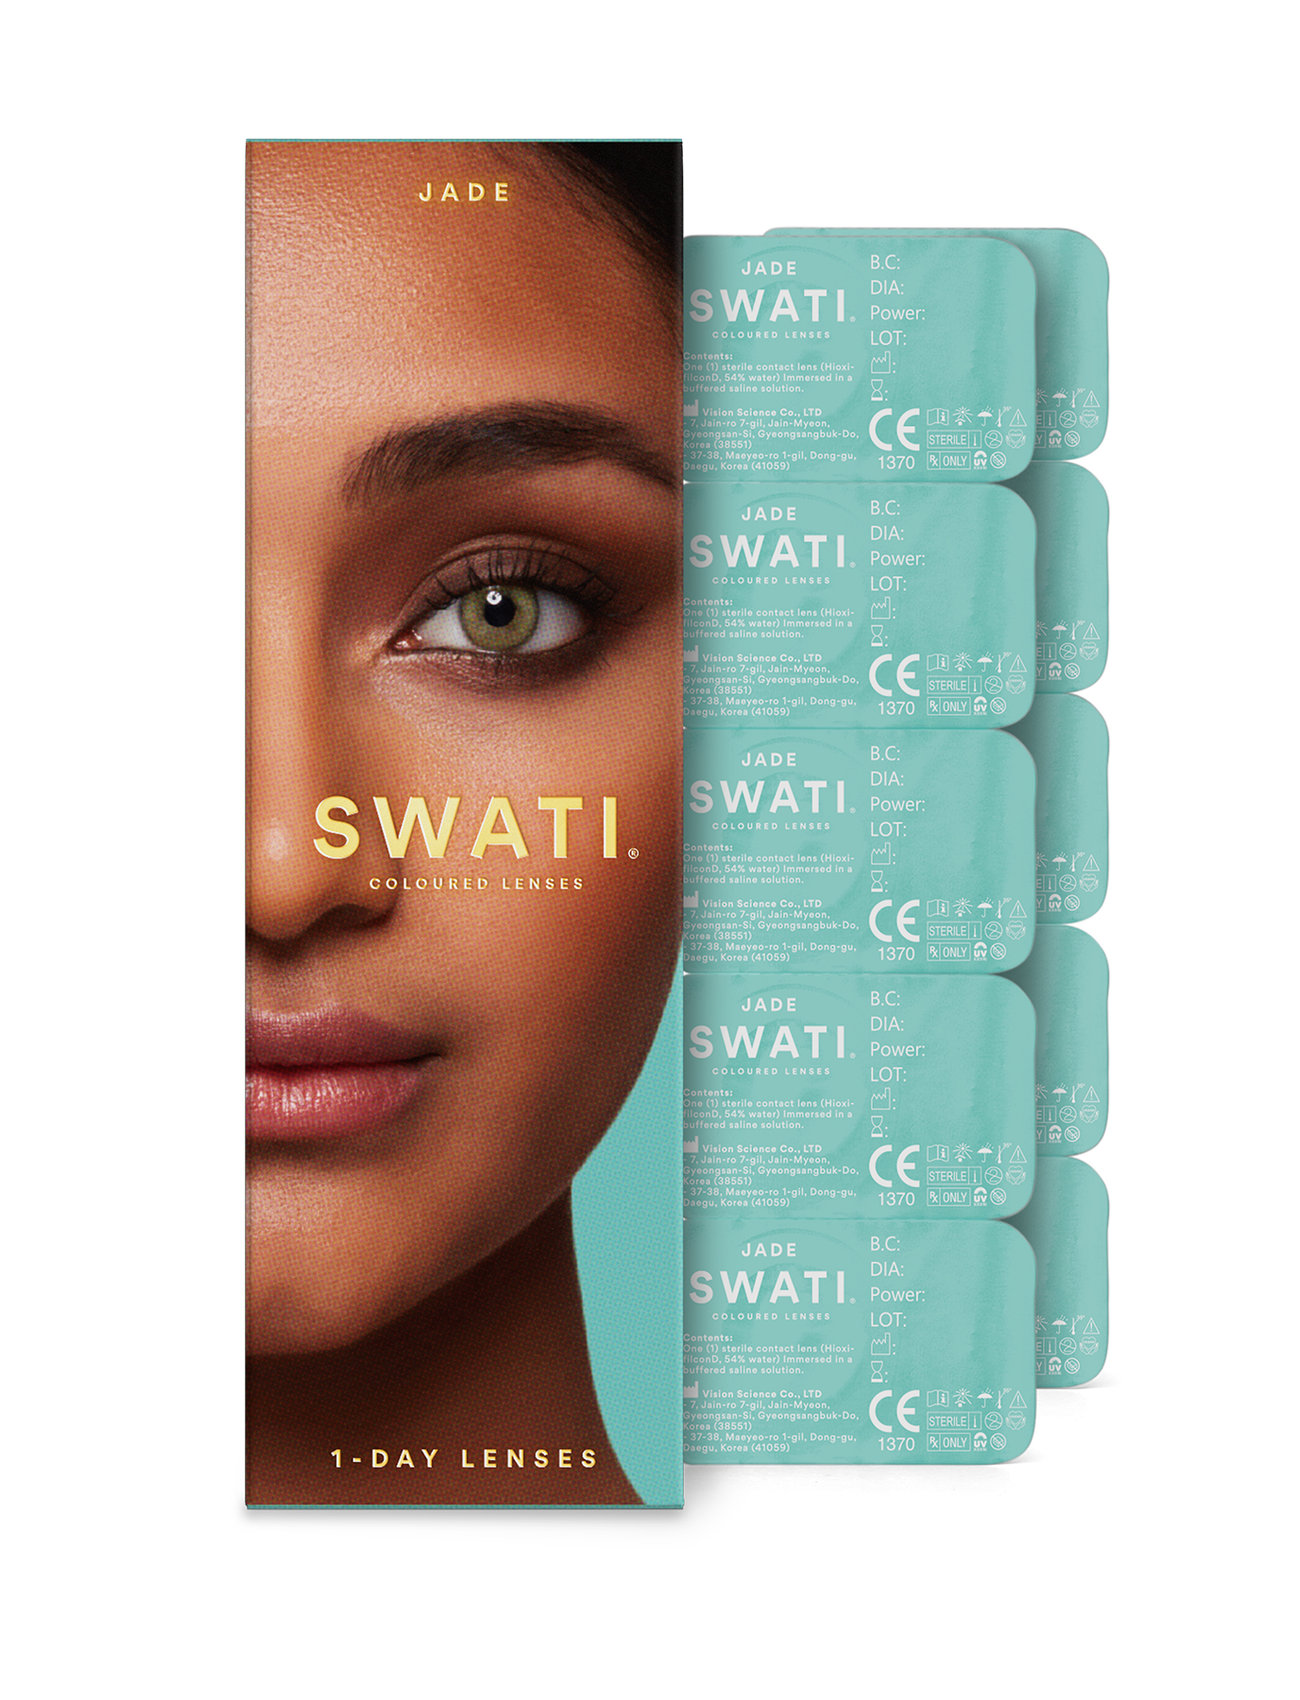 Jade - 1 Day Lenses Beauty Women Makeup Eyes Coloured Lenses SWATI Cosmetics